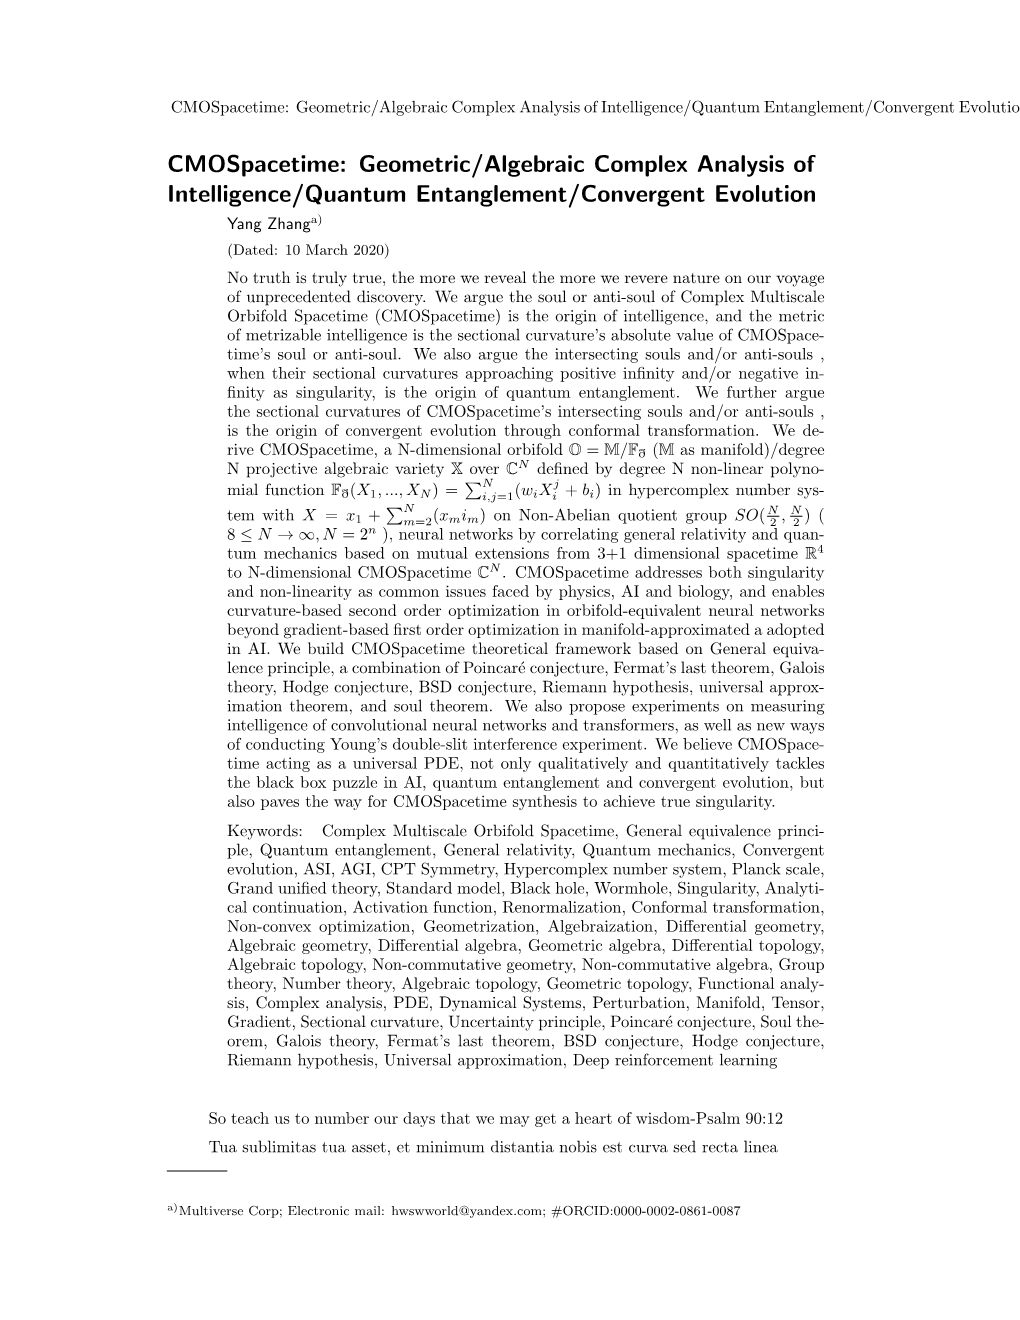 Geometric/Algebraic Complex Analysis of Intelligence/Quantum Entanglement/Convergent Evolution